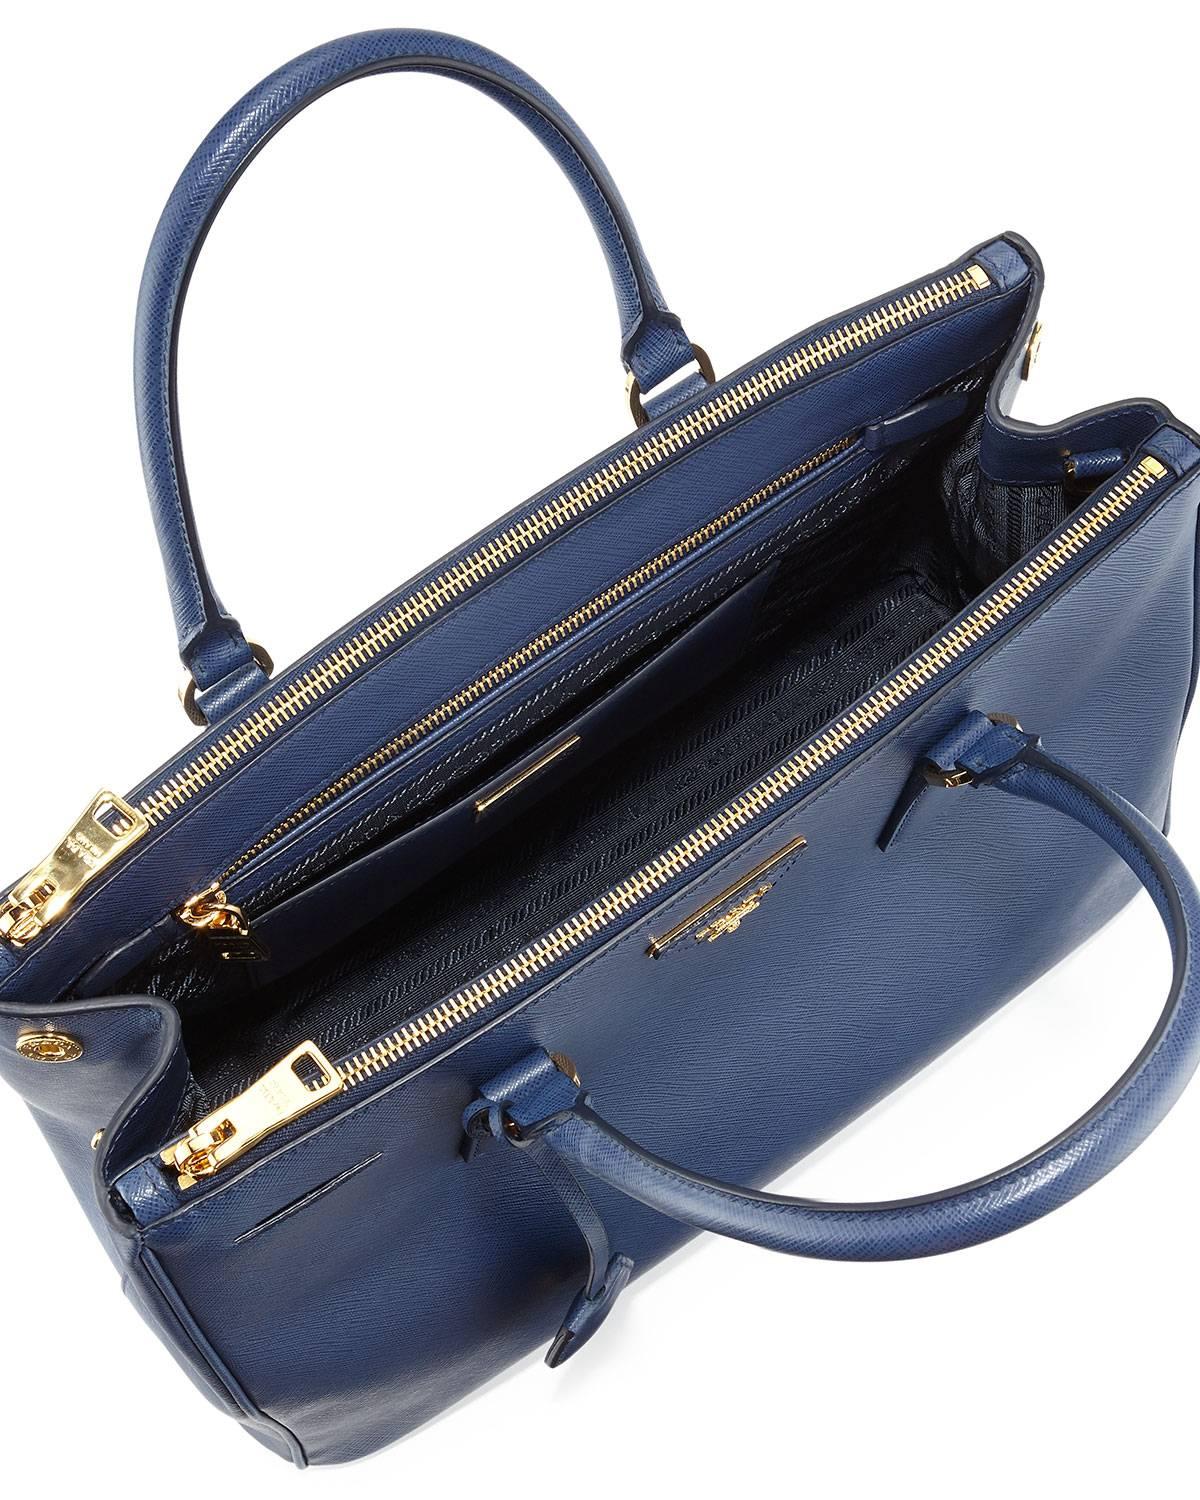 Prada Galleria Blue Saffiano Leather Tote Bag 1